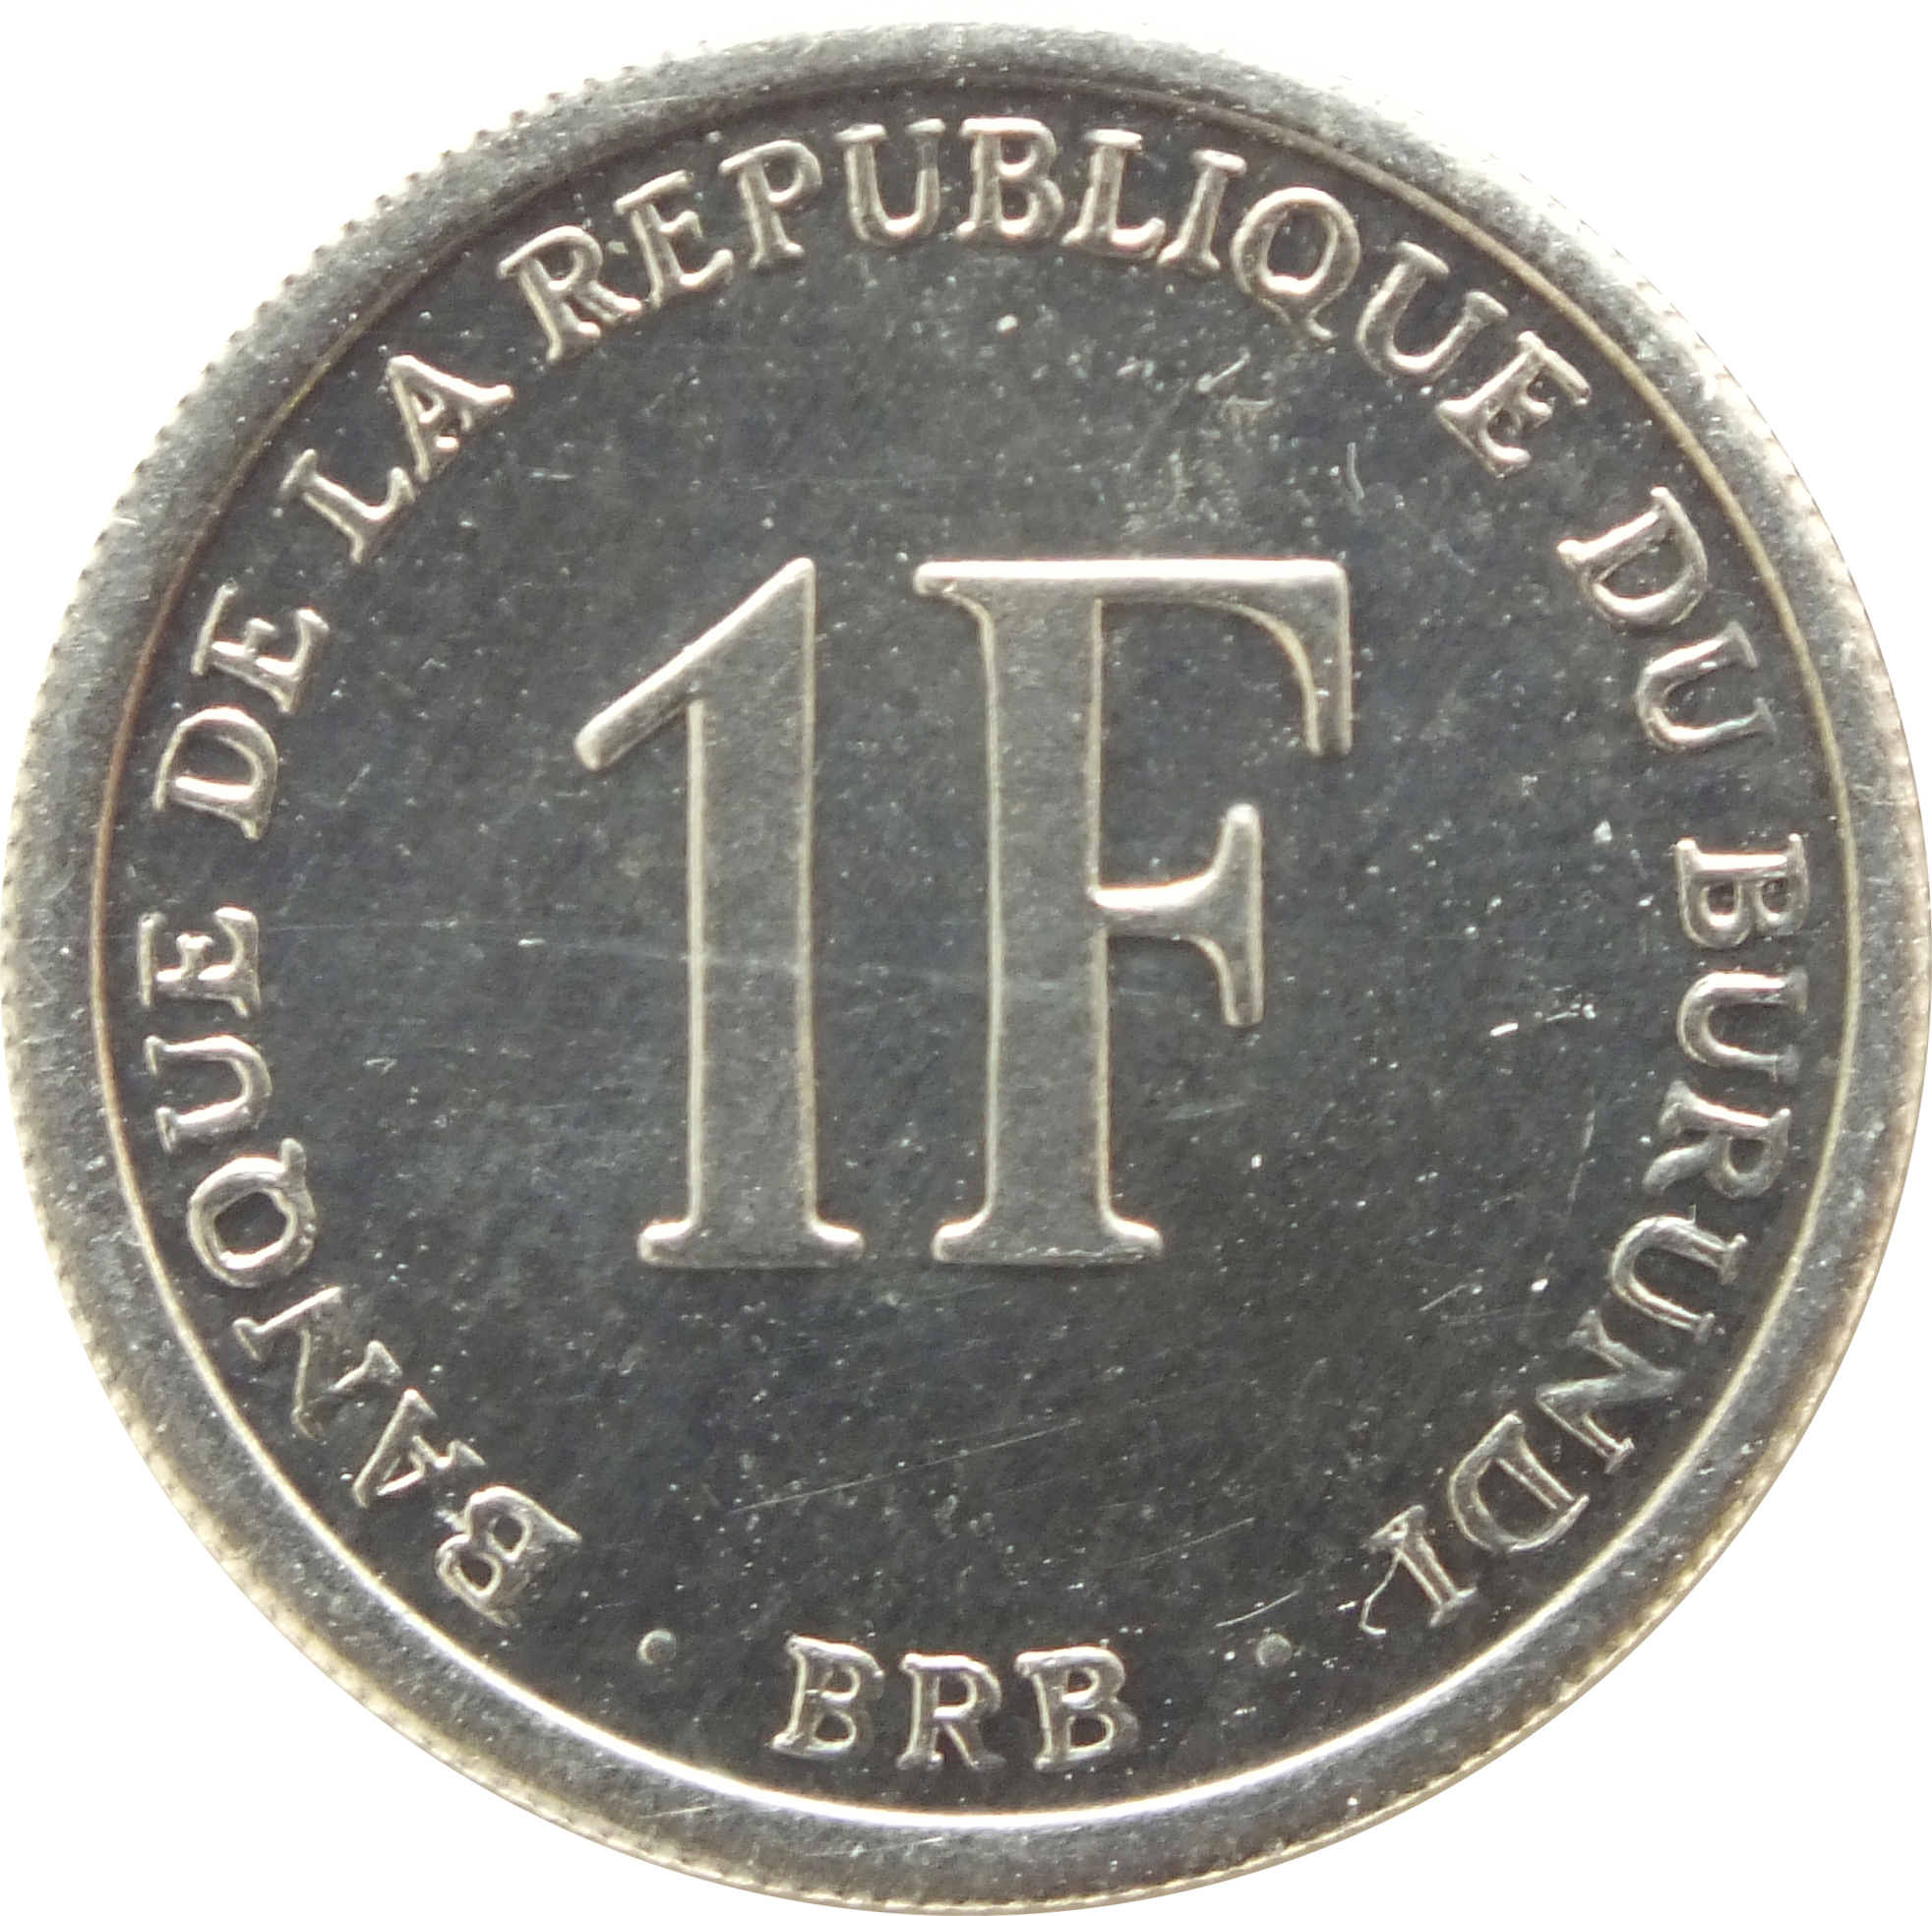 Burundi 1 Franc 2003 km19 19mm aluminum coins lot all BU UNC 20pcs 